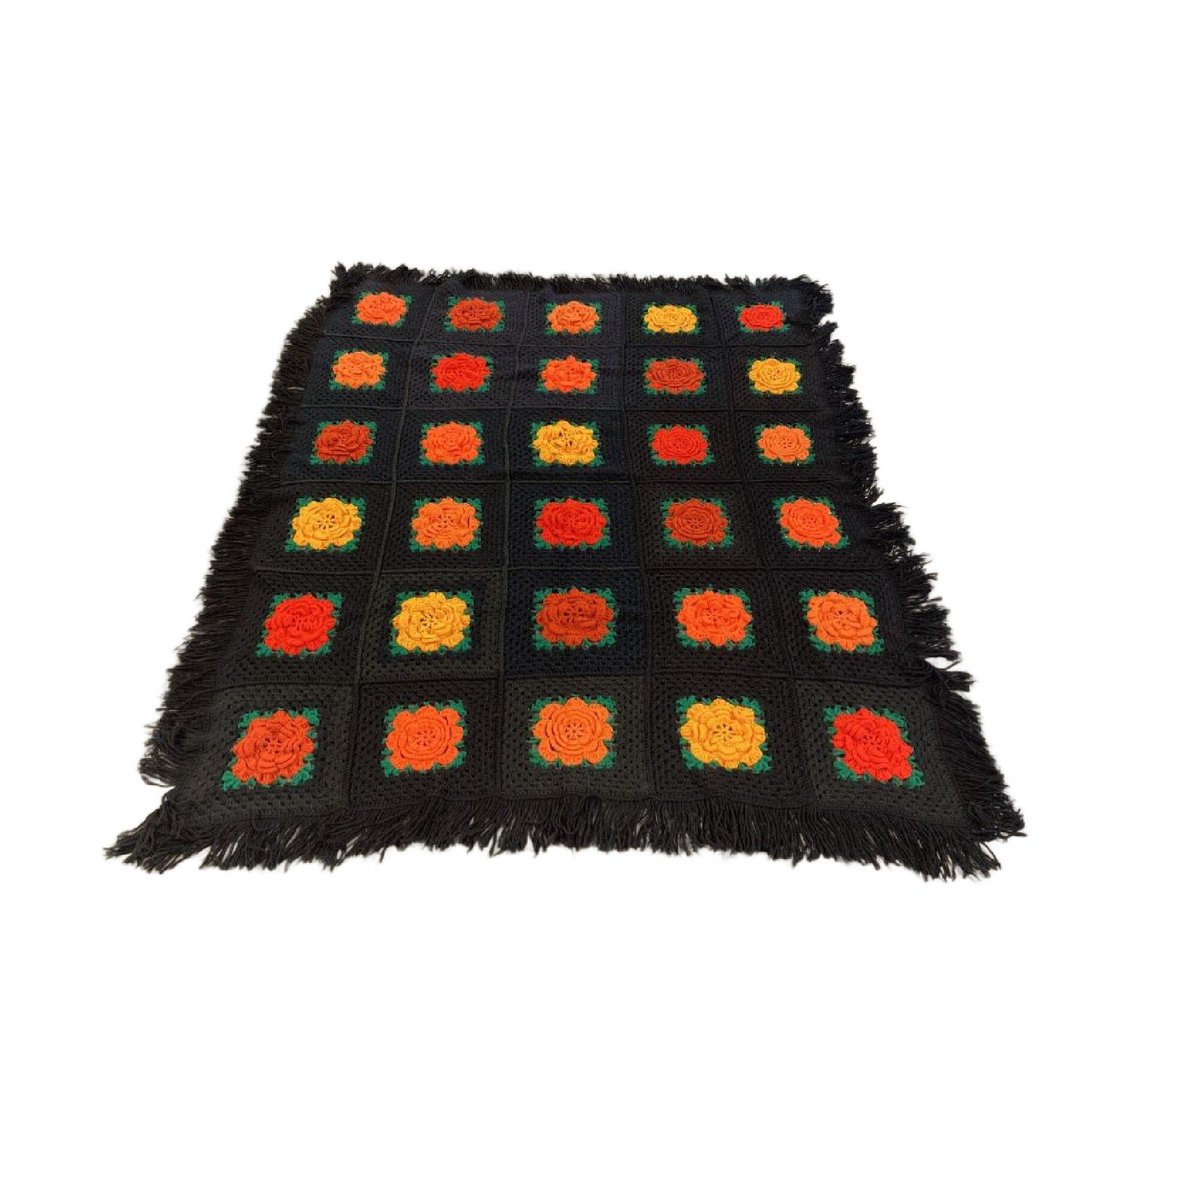 Vintage Crocheted Granny Square Rosette Afghan with Fringe, Black, Orange, Yellow, 1970s, Free Shipping tuppu.net/87cea994  #GrannySquareAfghan